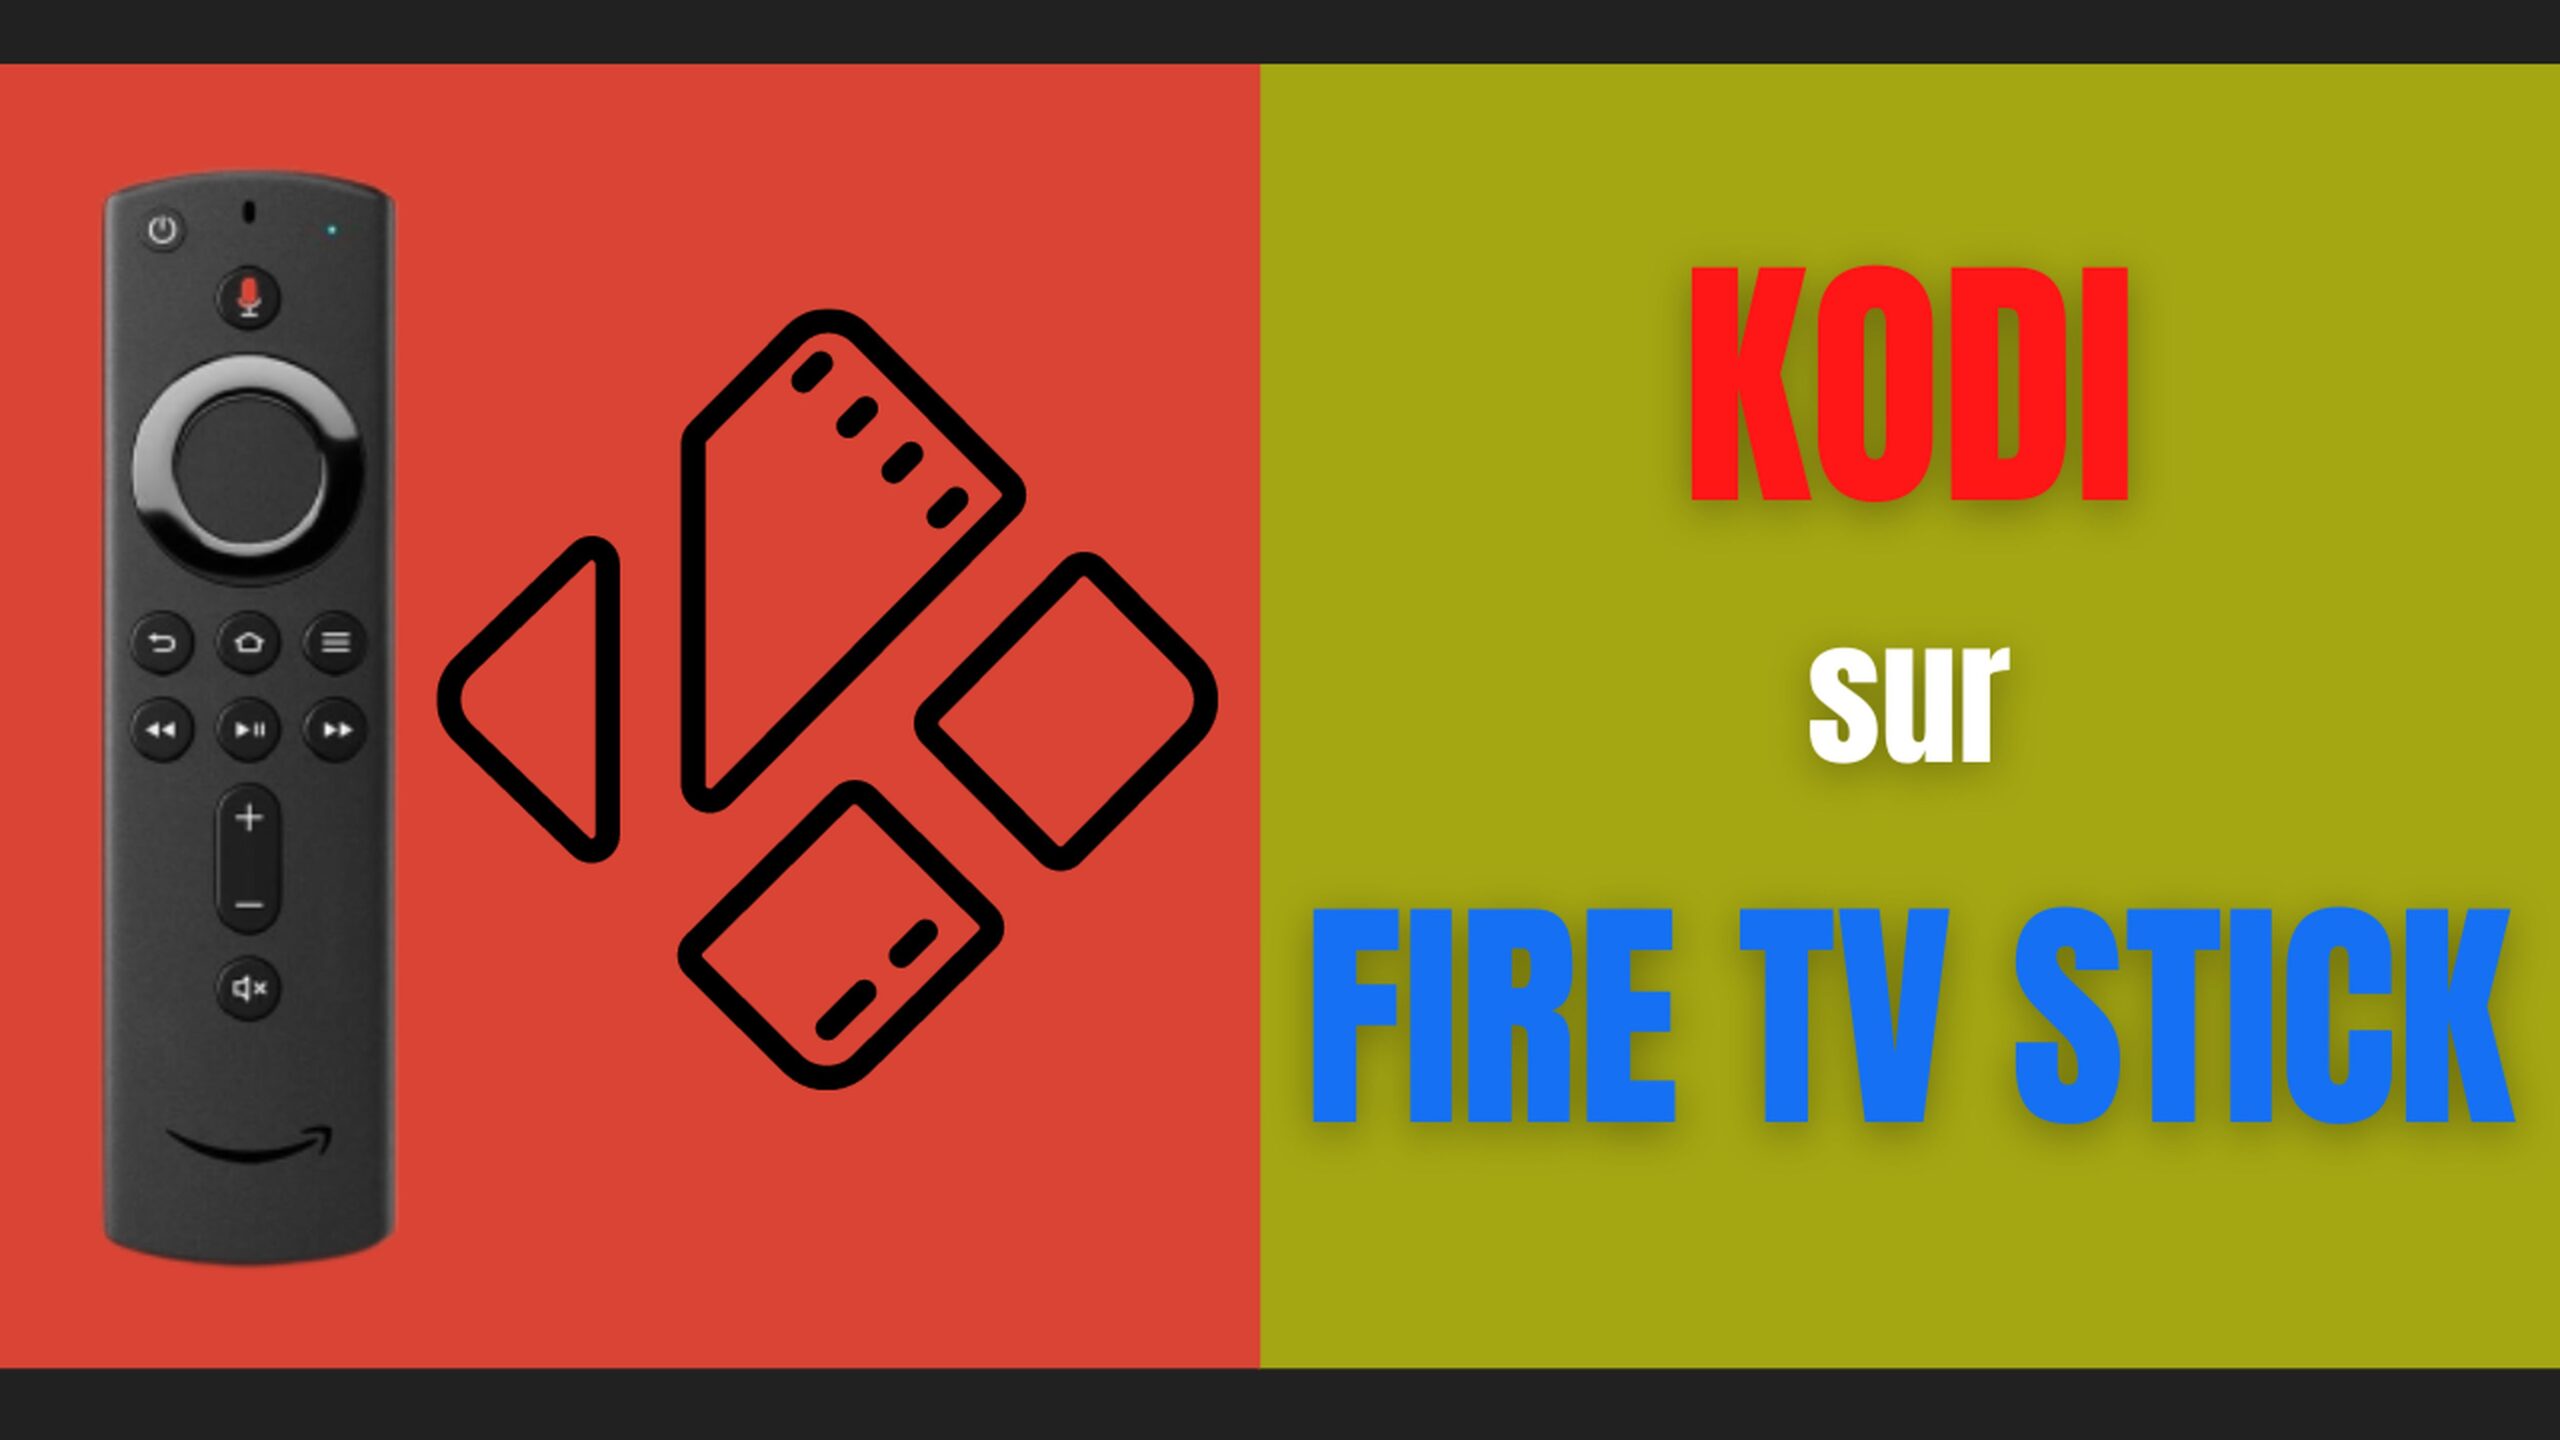 KODI sur Fire TV Stick d’ Amazon